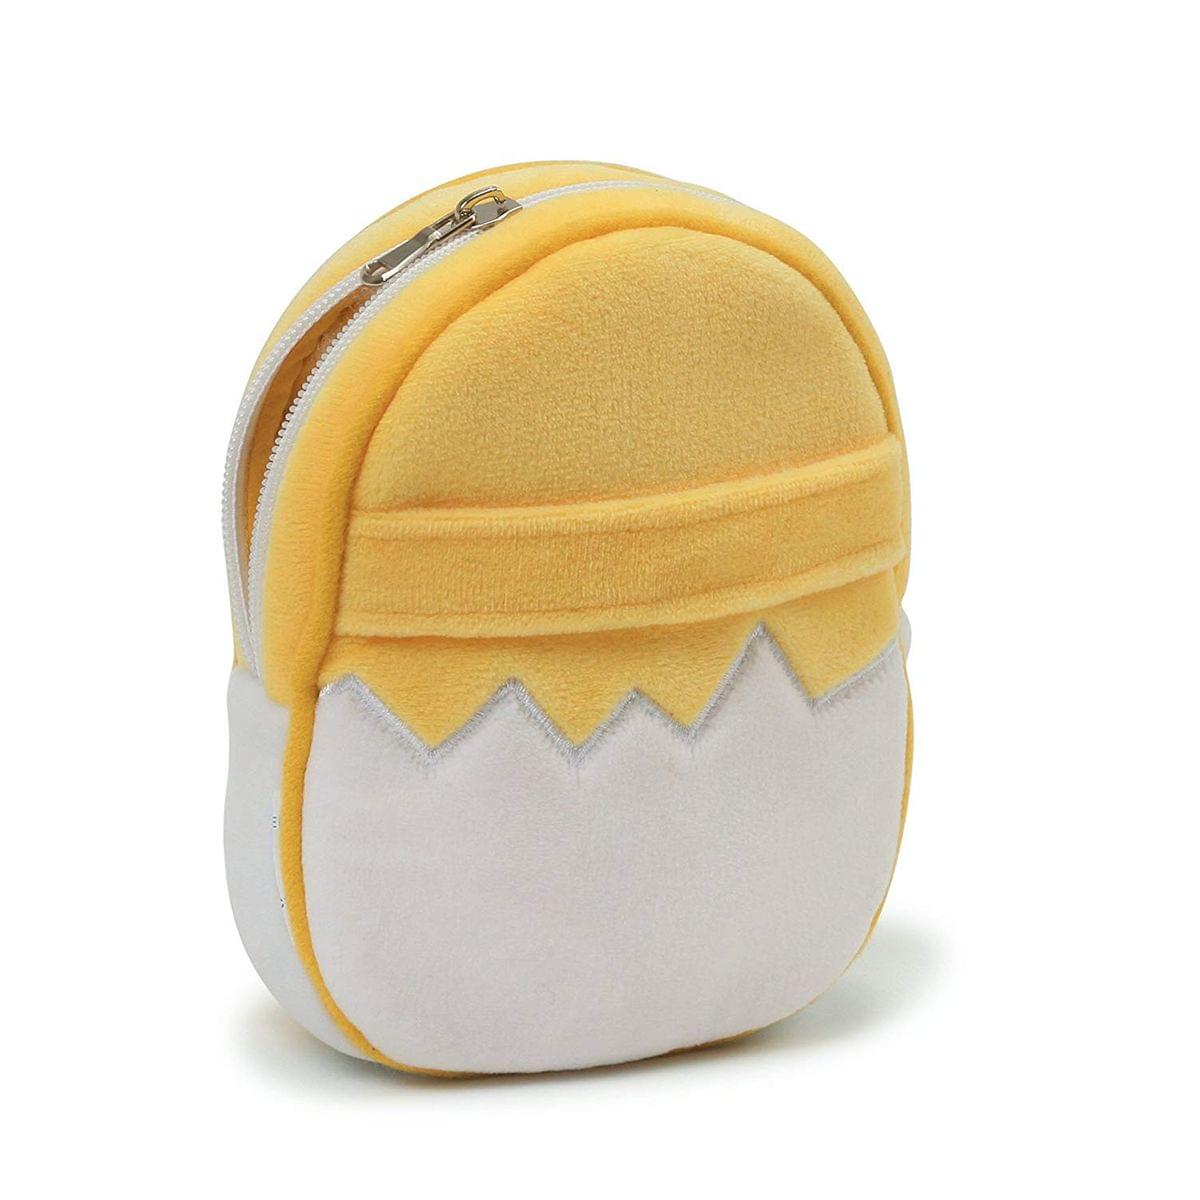 Gudetama the Lazy Egg 6.5-Inch Plush Zipper Pouch